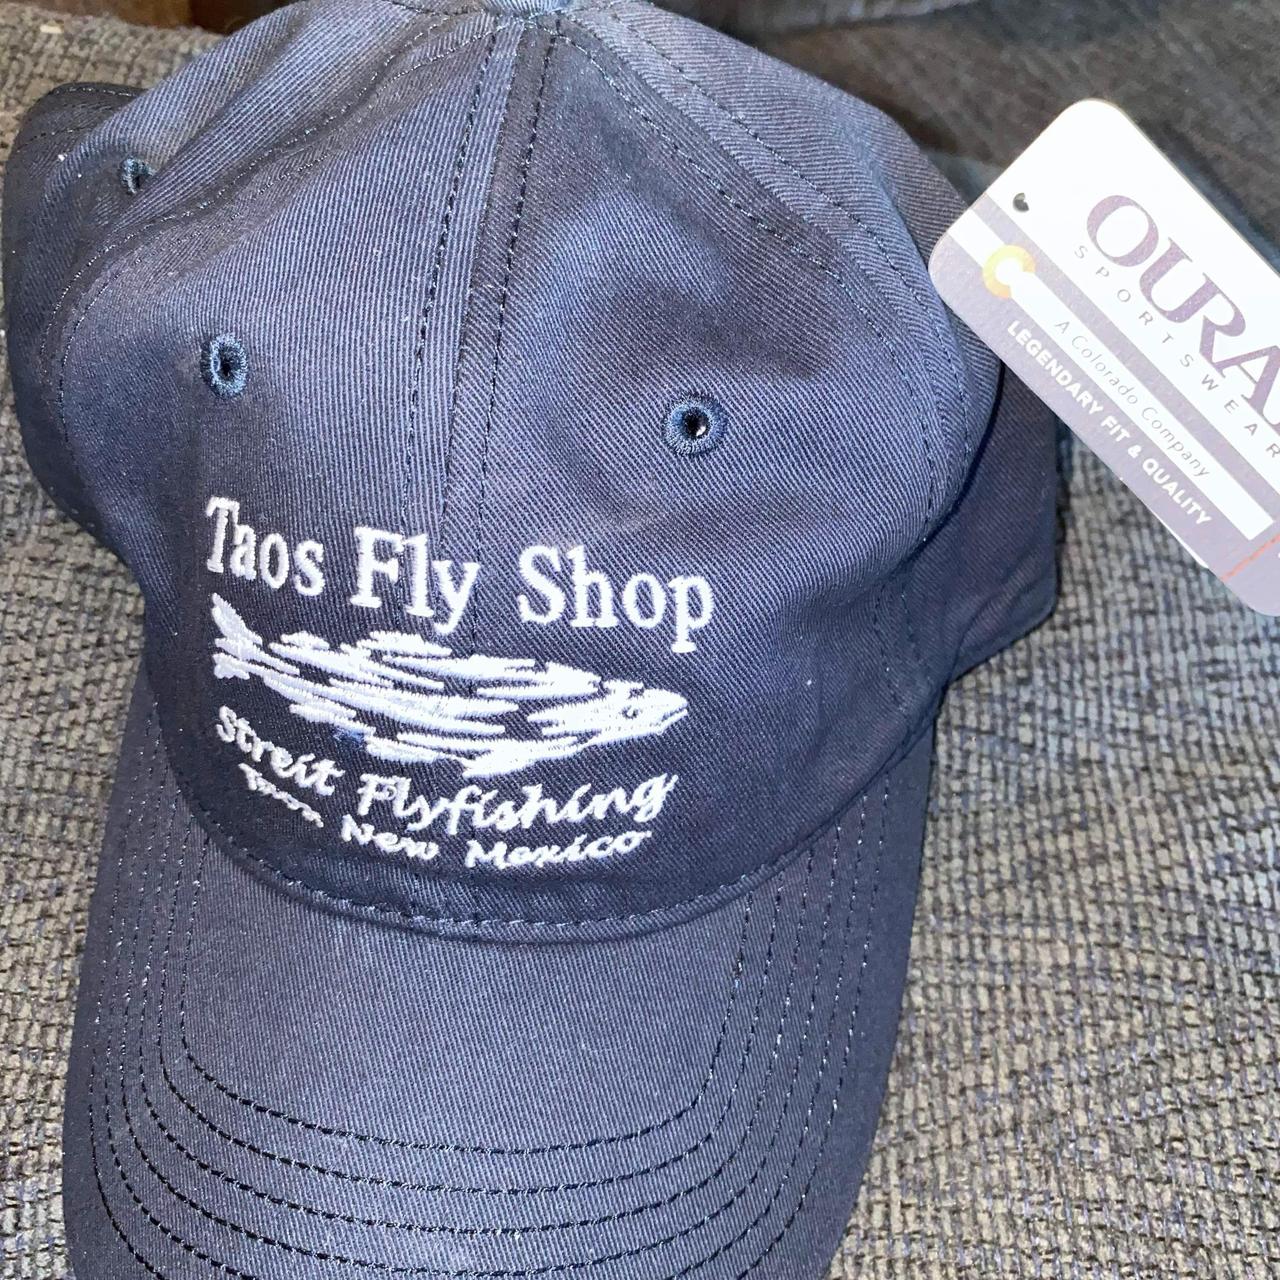 Taos Fly Shoe fly fishing baseball cap hat